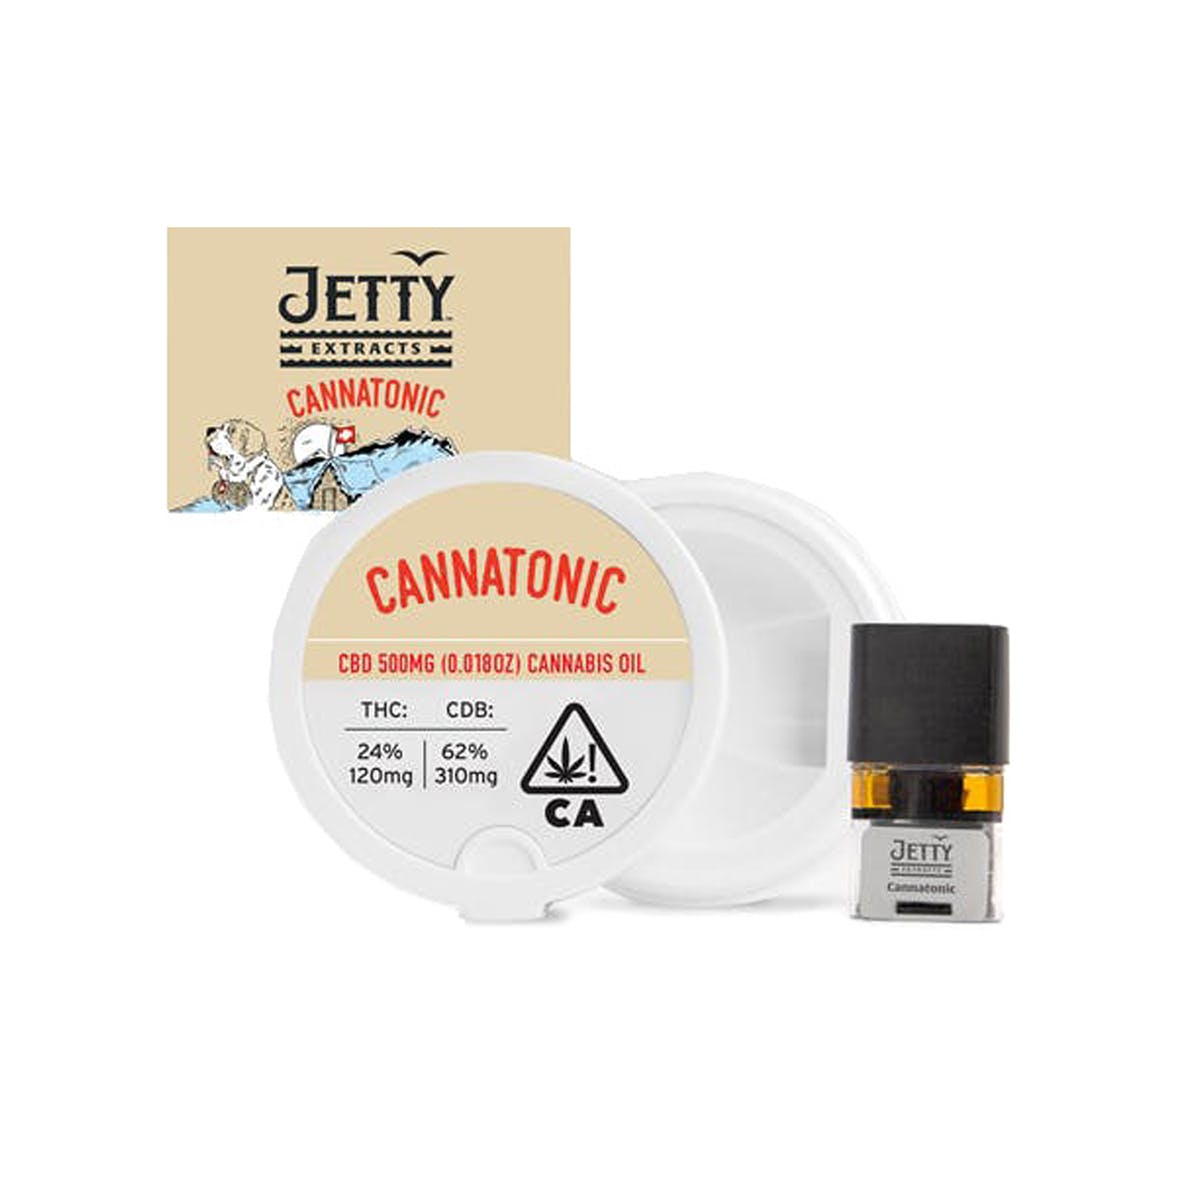 marijuana-dispensaries-mendocino-organics-in-vallejo-pax-era-pod-jetty-extracts-cannatonic-31